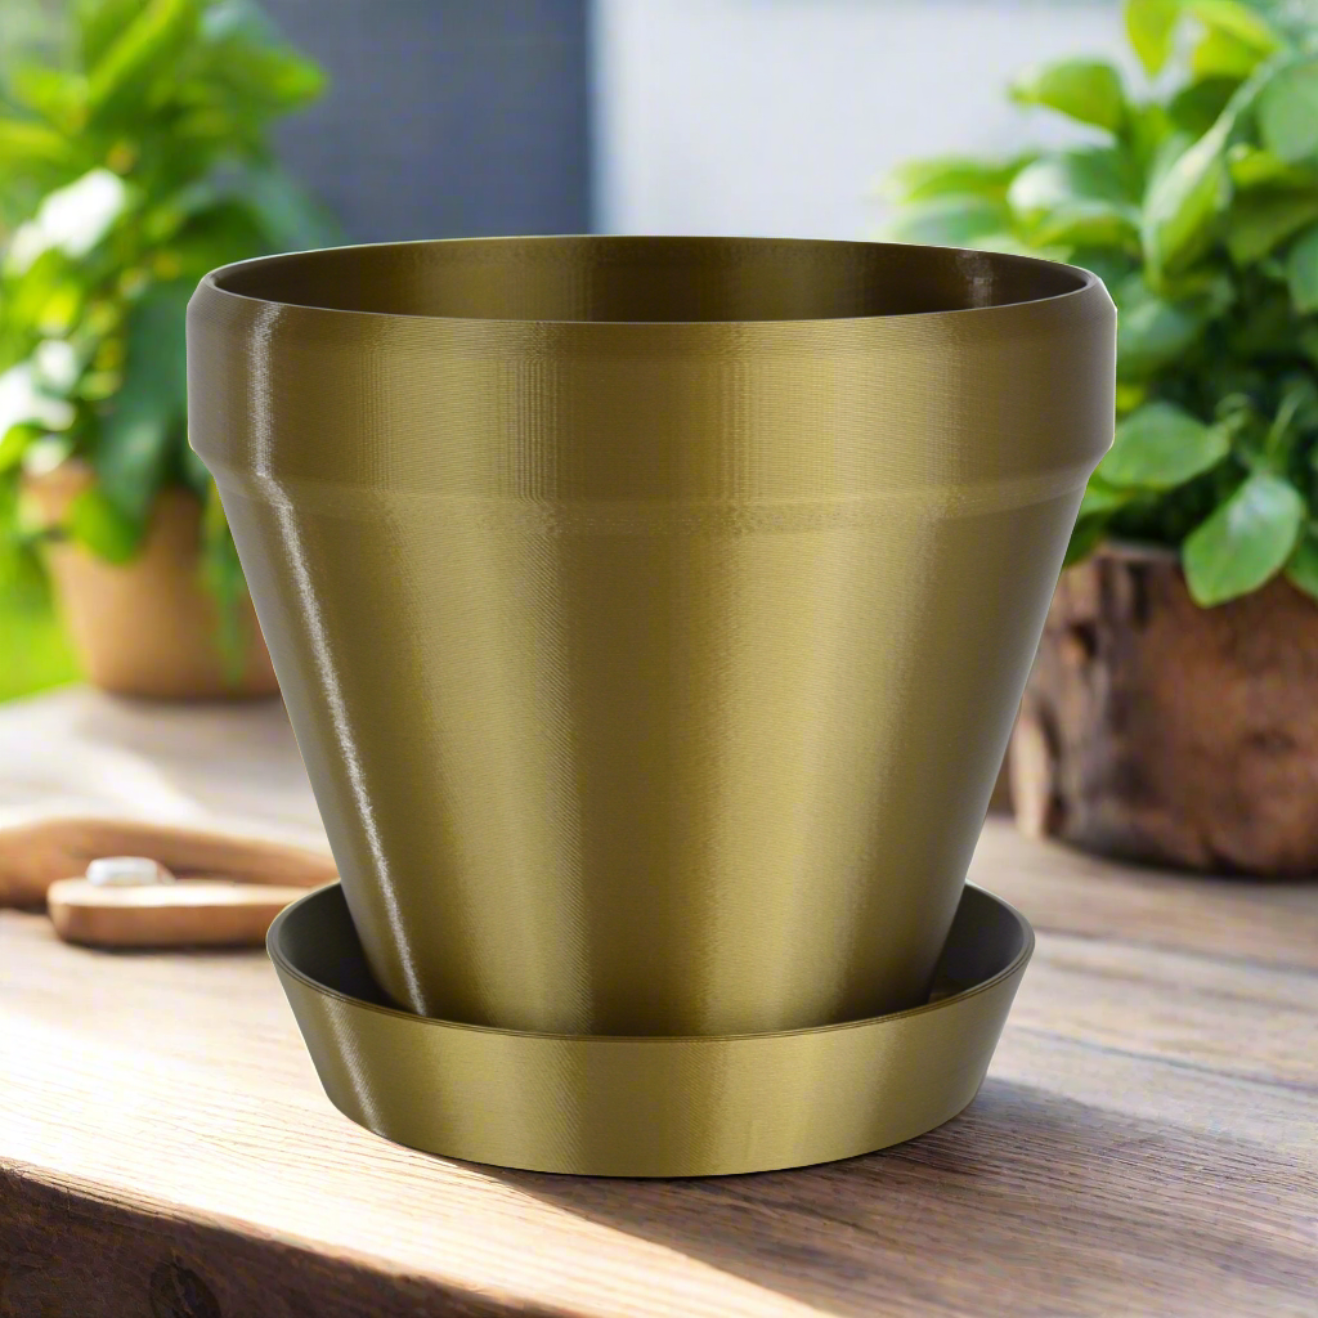 Large Classic Flower Pot, 8-inch Round Planter, Bronze Color, Indoor / Outdoor